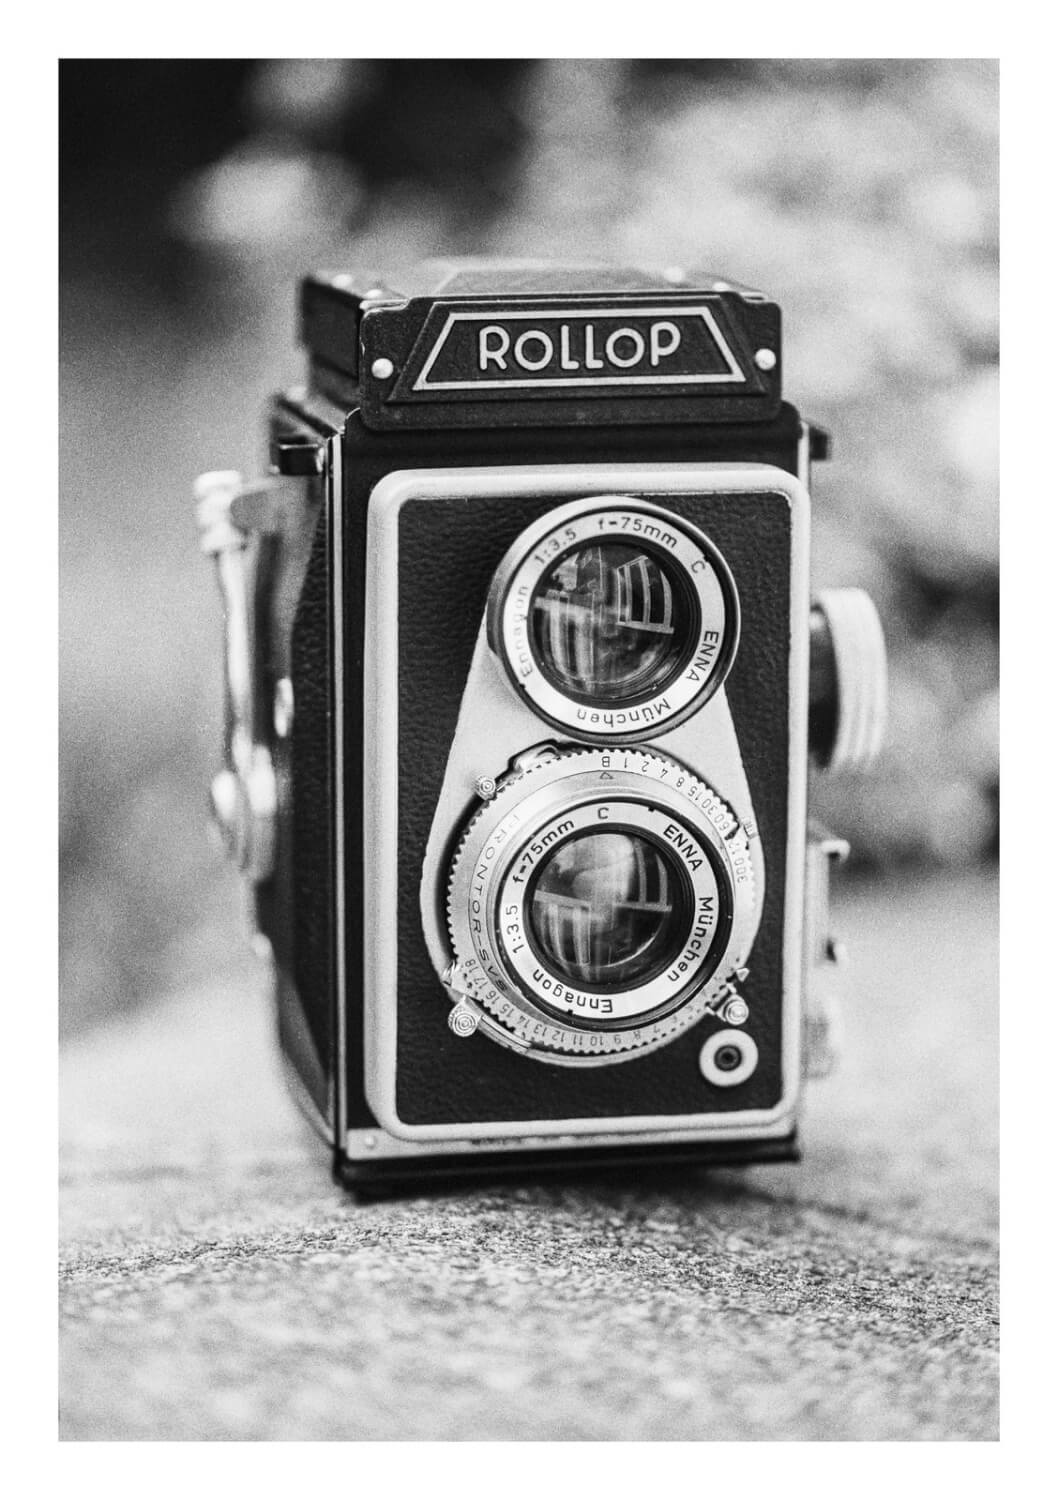 The Lipca Rollop II. Portrait by Nikon F80, Sigma 105mm f/2.8 OS HSM, and ILFORD HP5 PLUS (@ EI 1600).